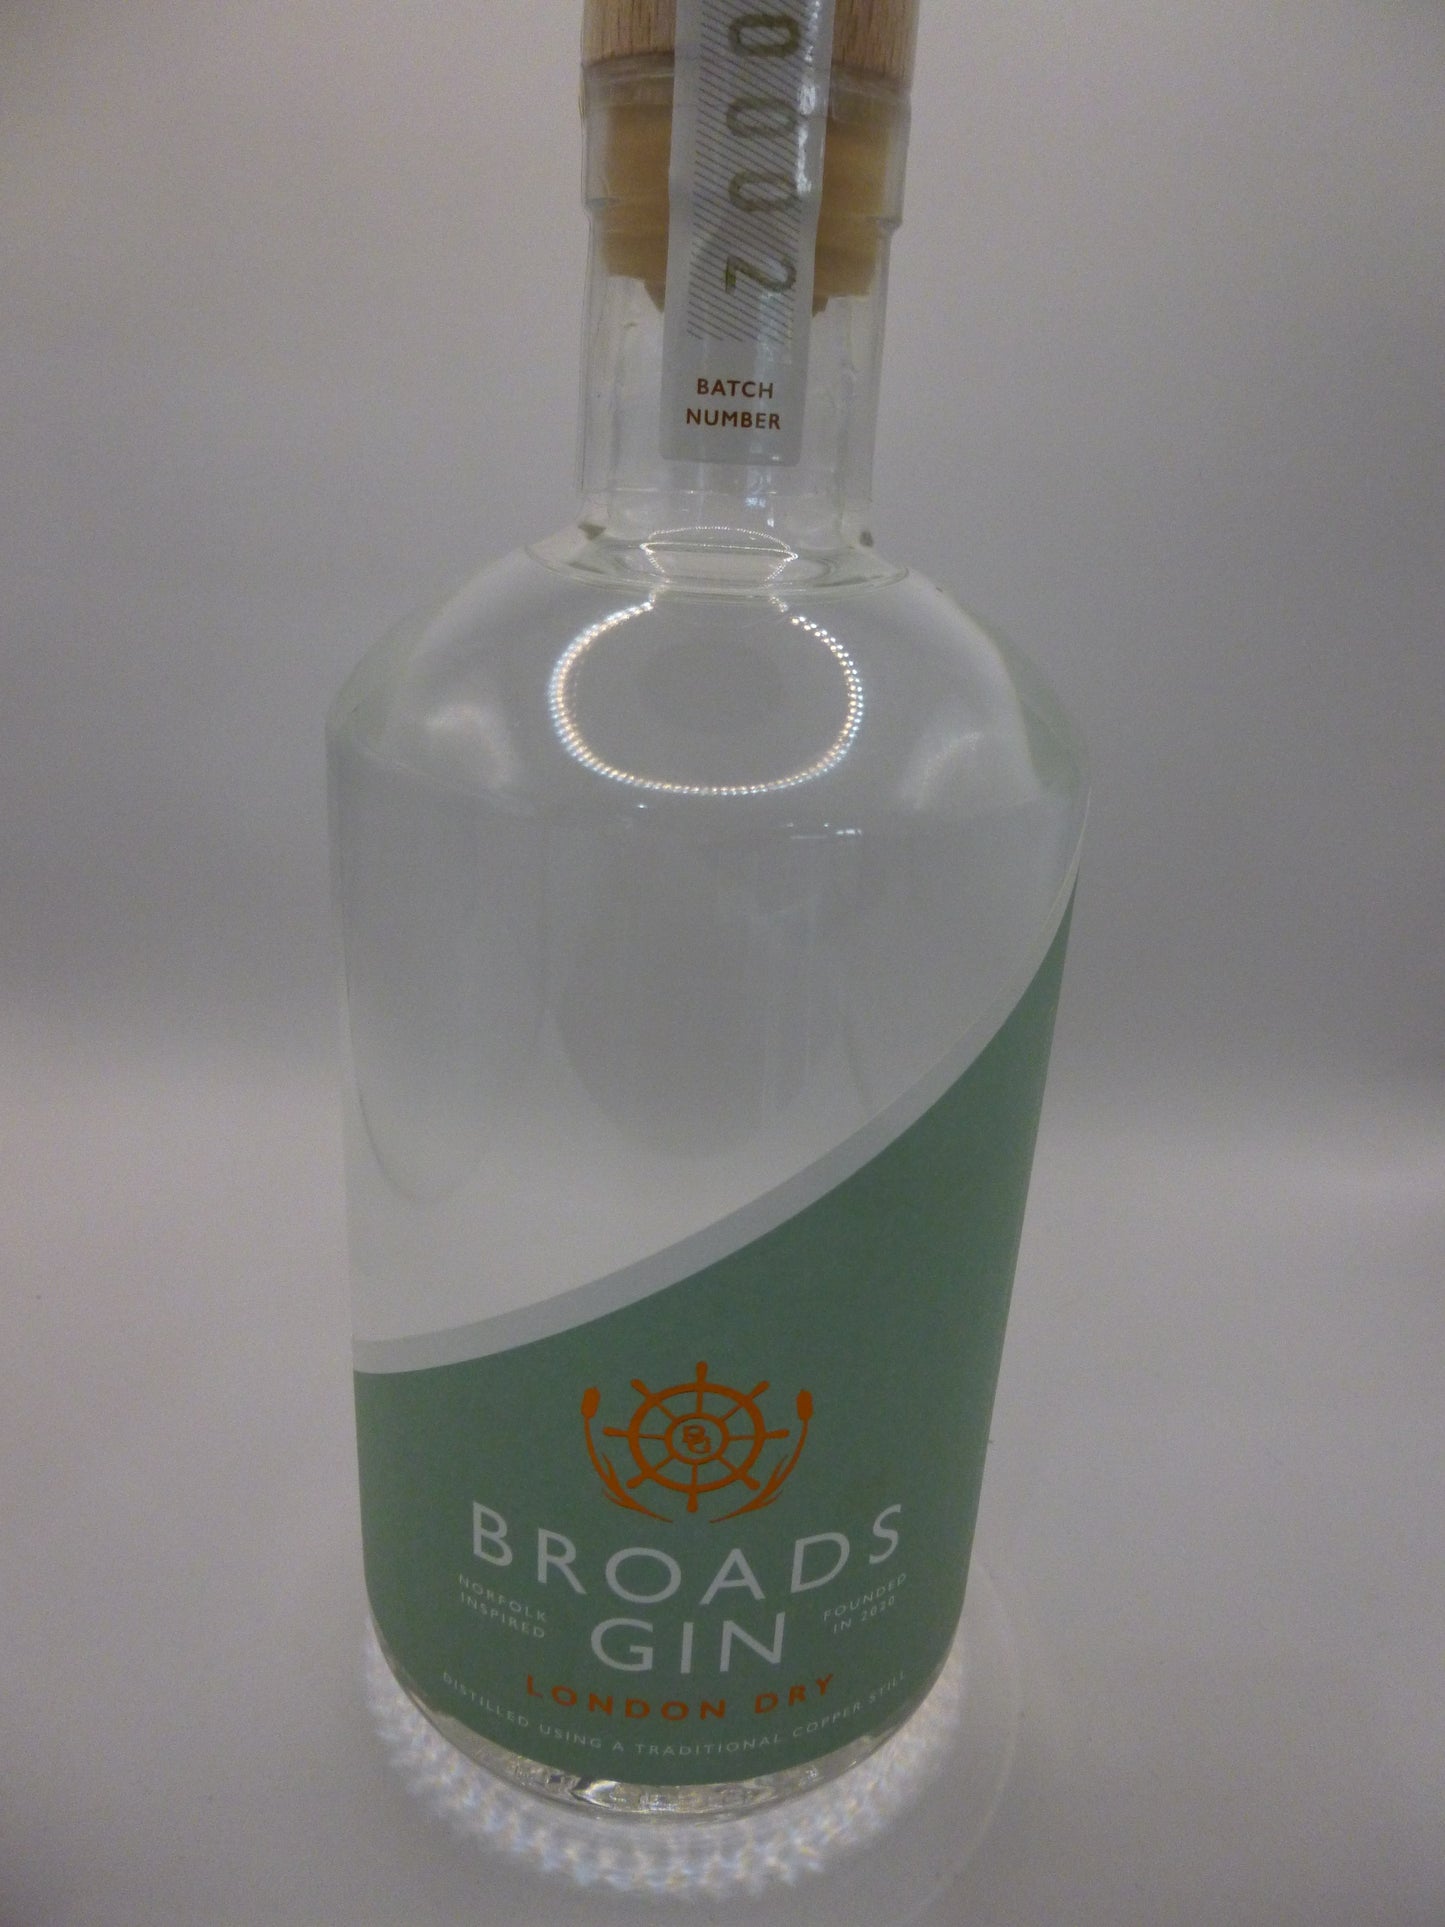 Broads Gin London Dry